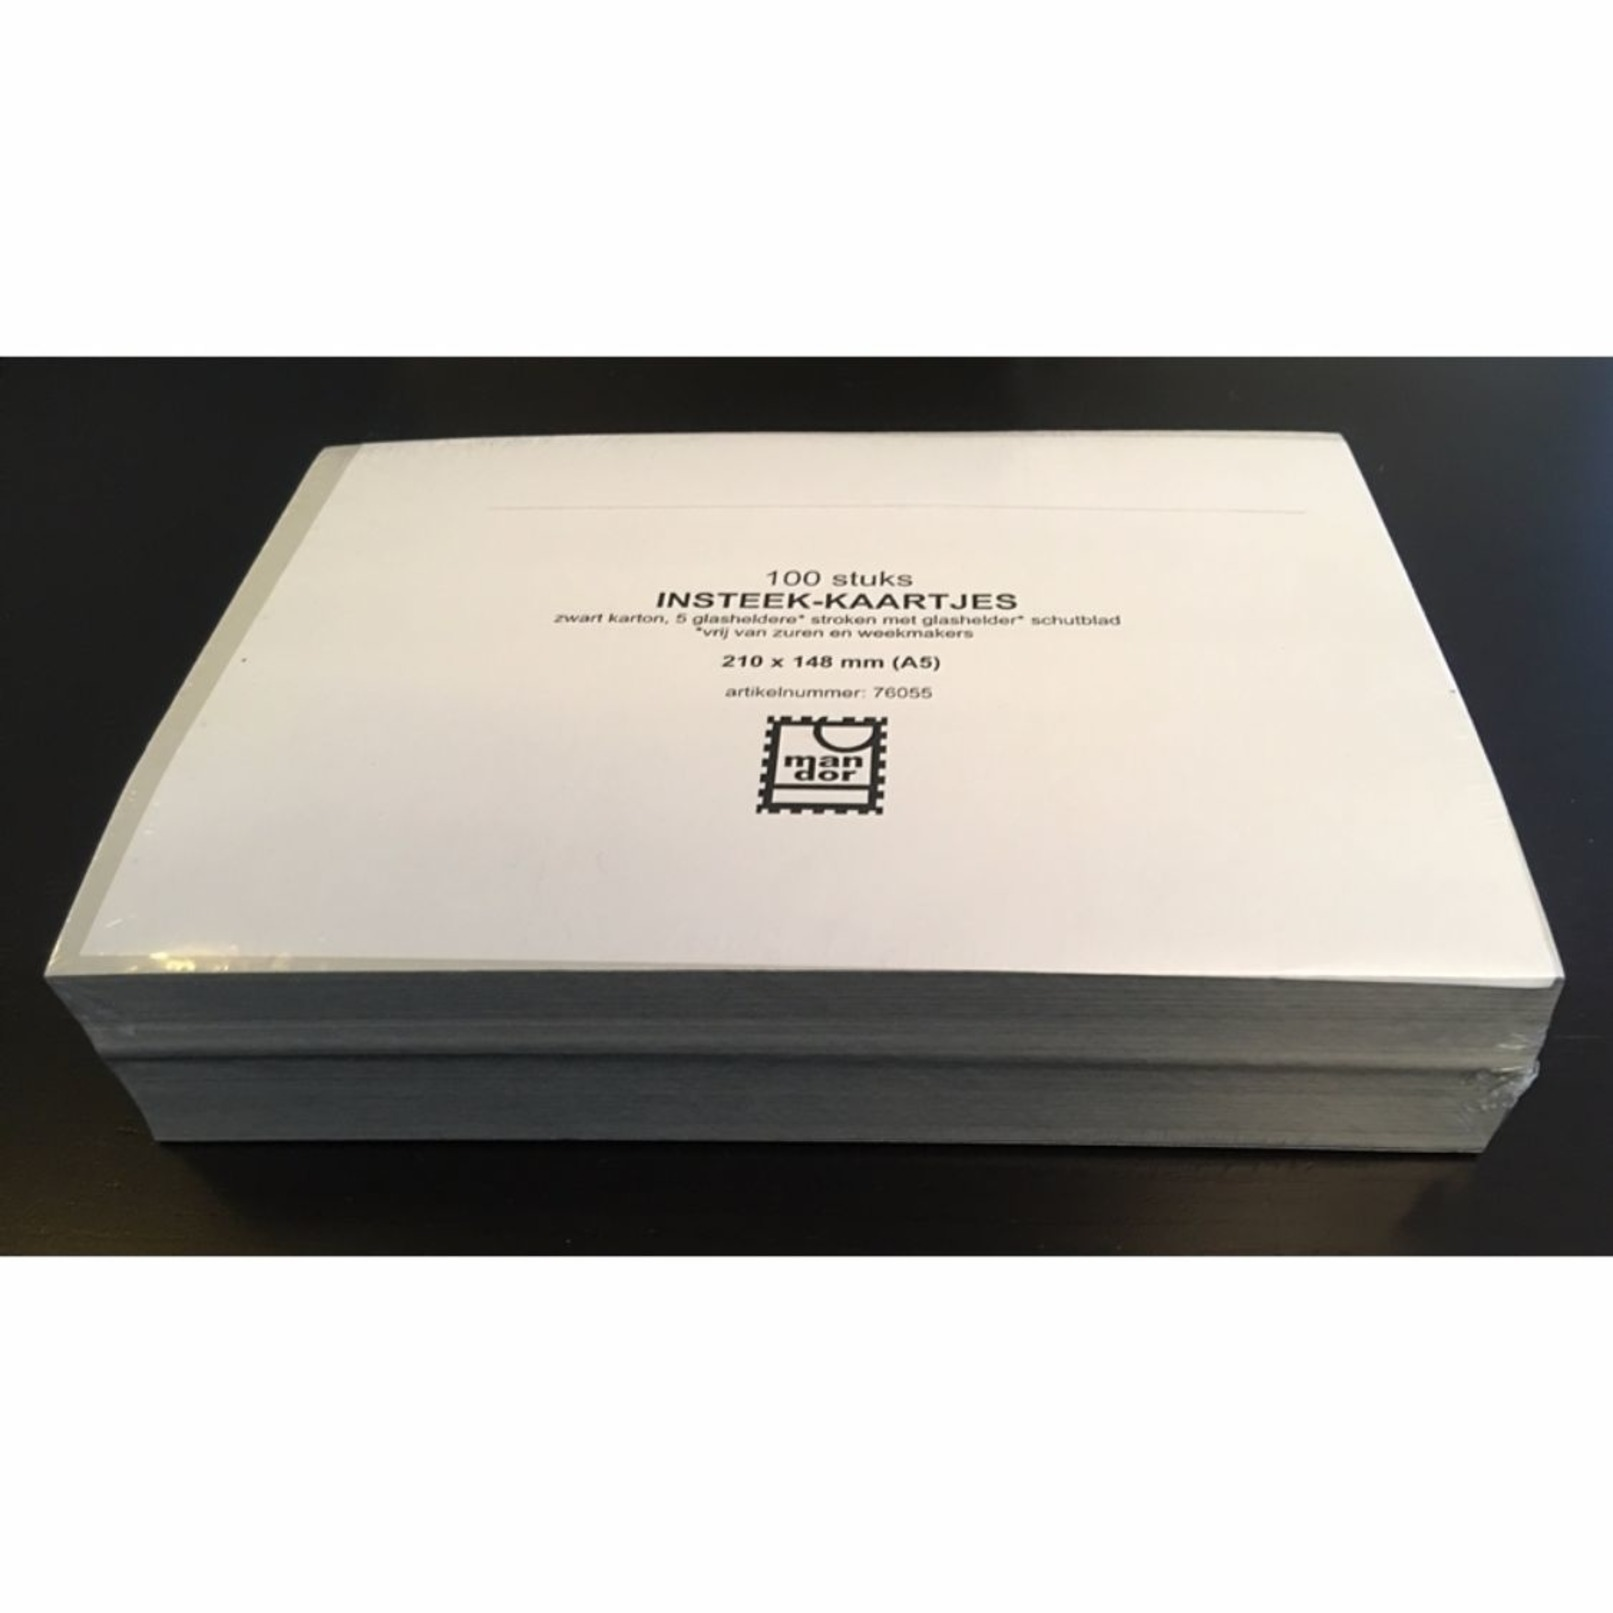 Stock Cards Pack Of 100 / 210 X 148mm (A5) / 5 Crystal Clear Strips + Protective Flap - Klasseerkaarten